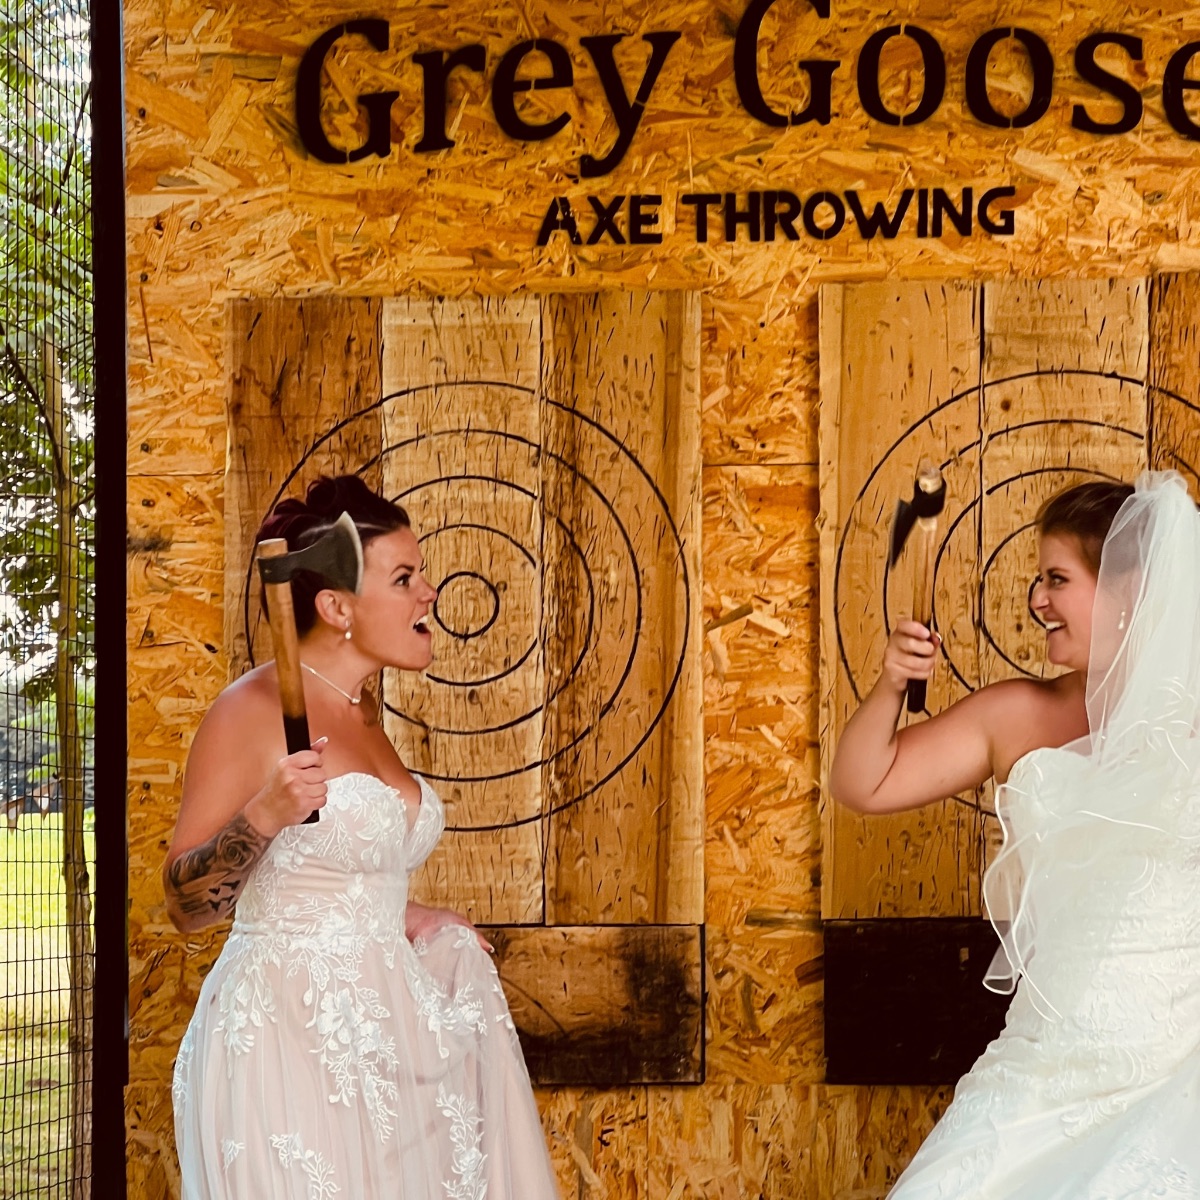 Grey Goose Axe Throwing -Image-69